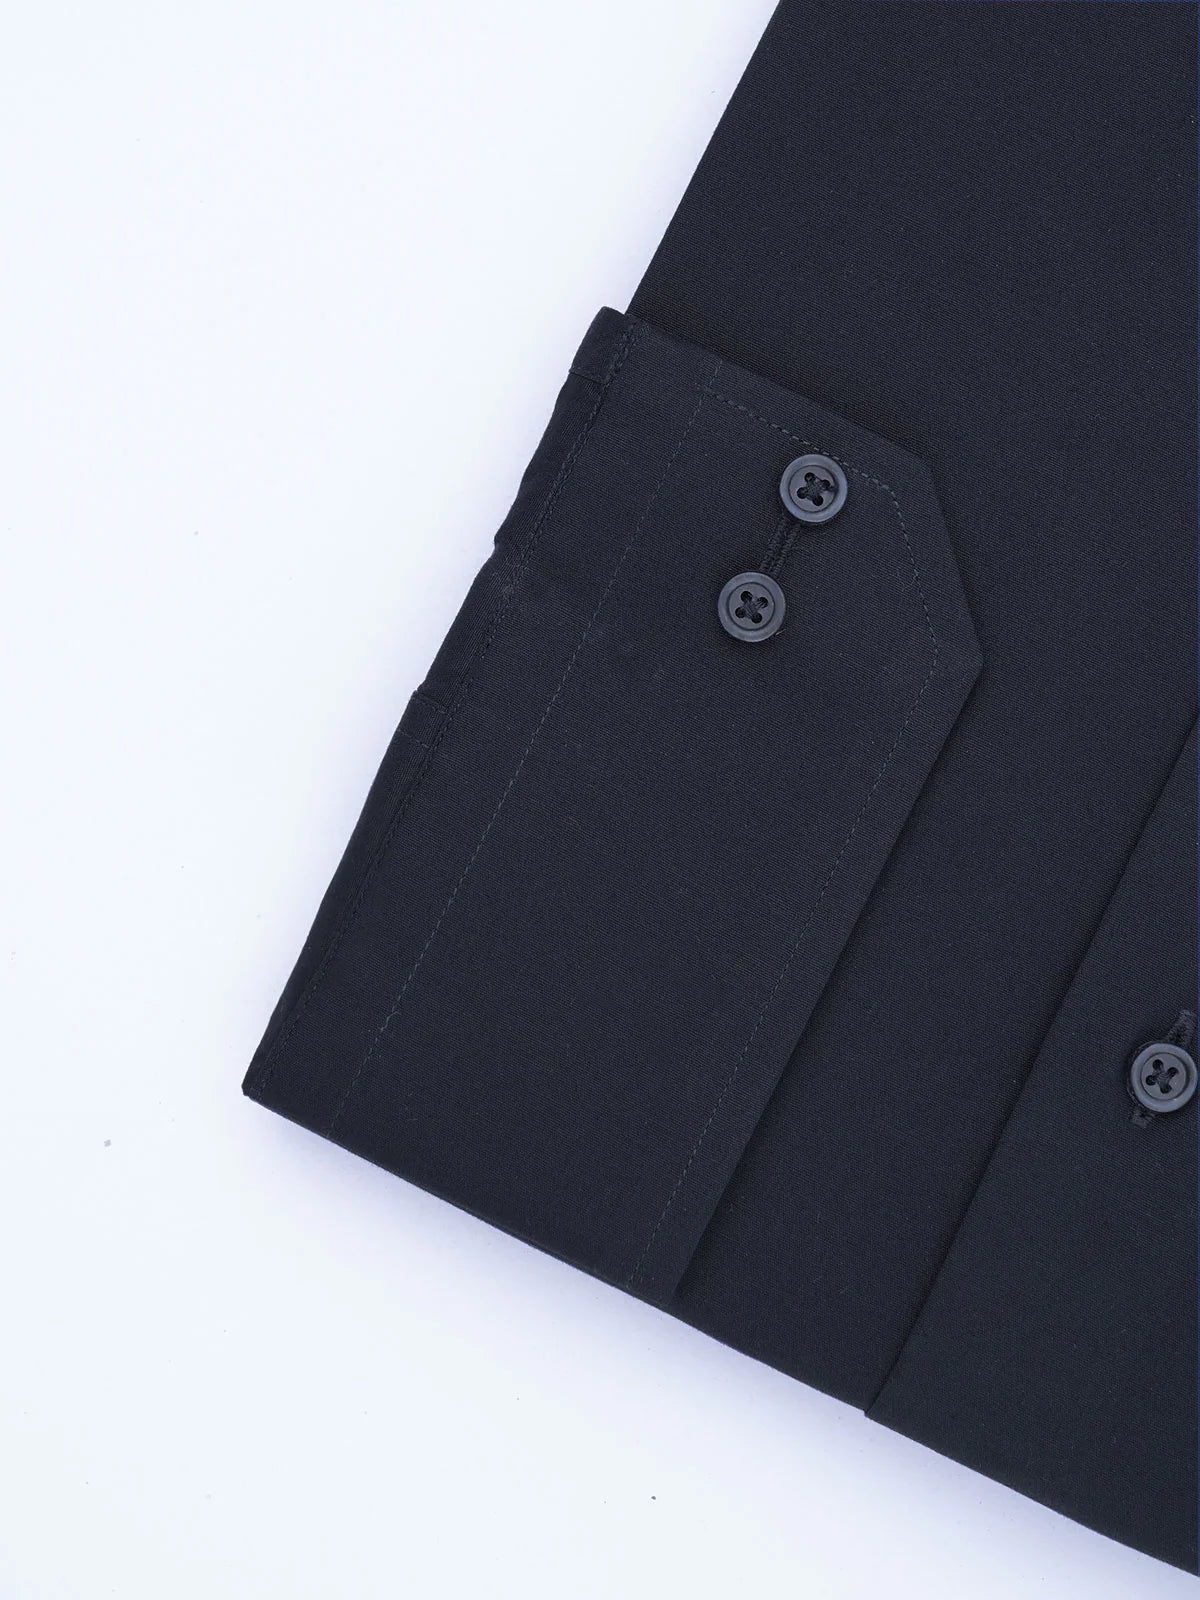 Navy Blue Plain, Elite Edition, French Collar Men’s Formal Shirt (ss-04FS)